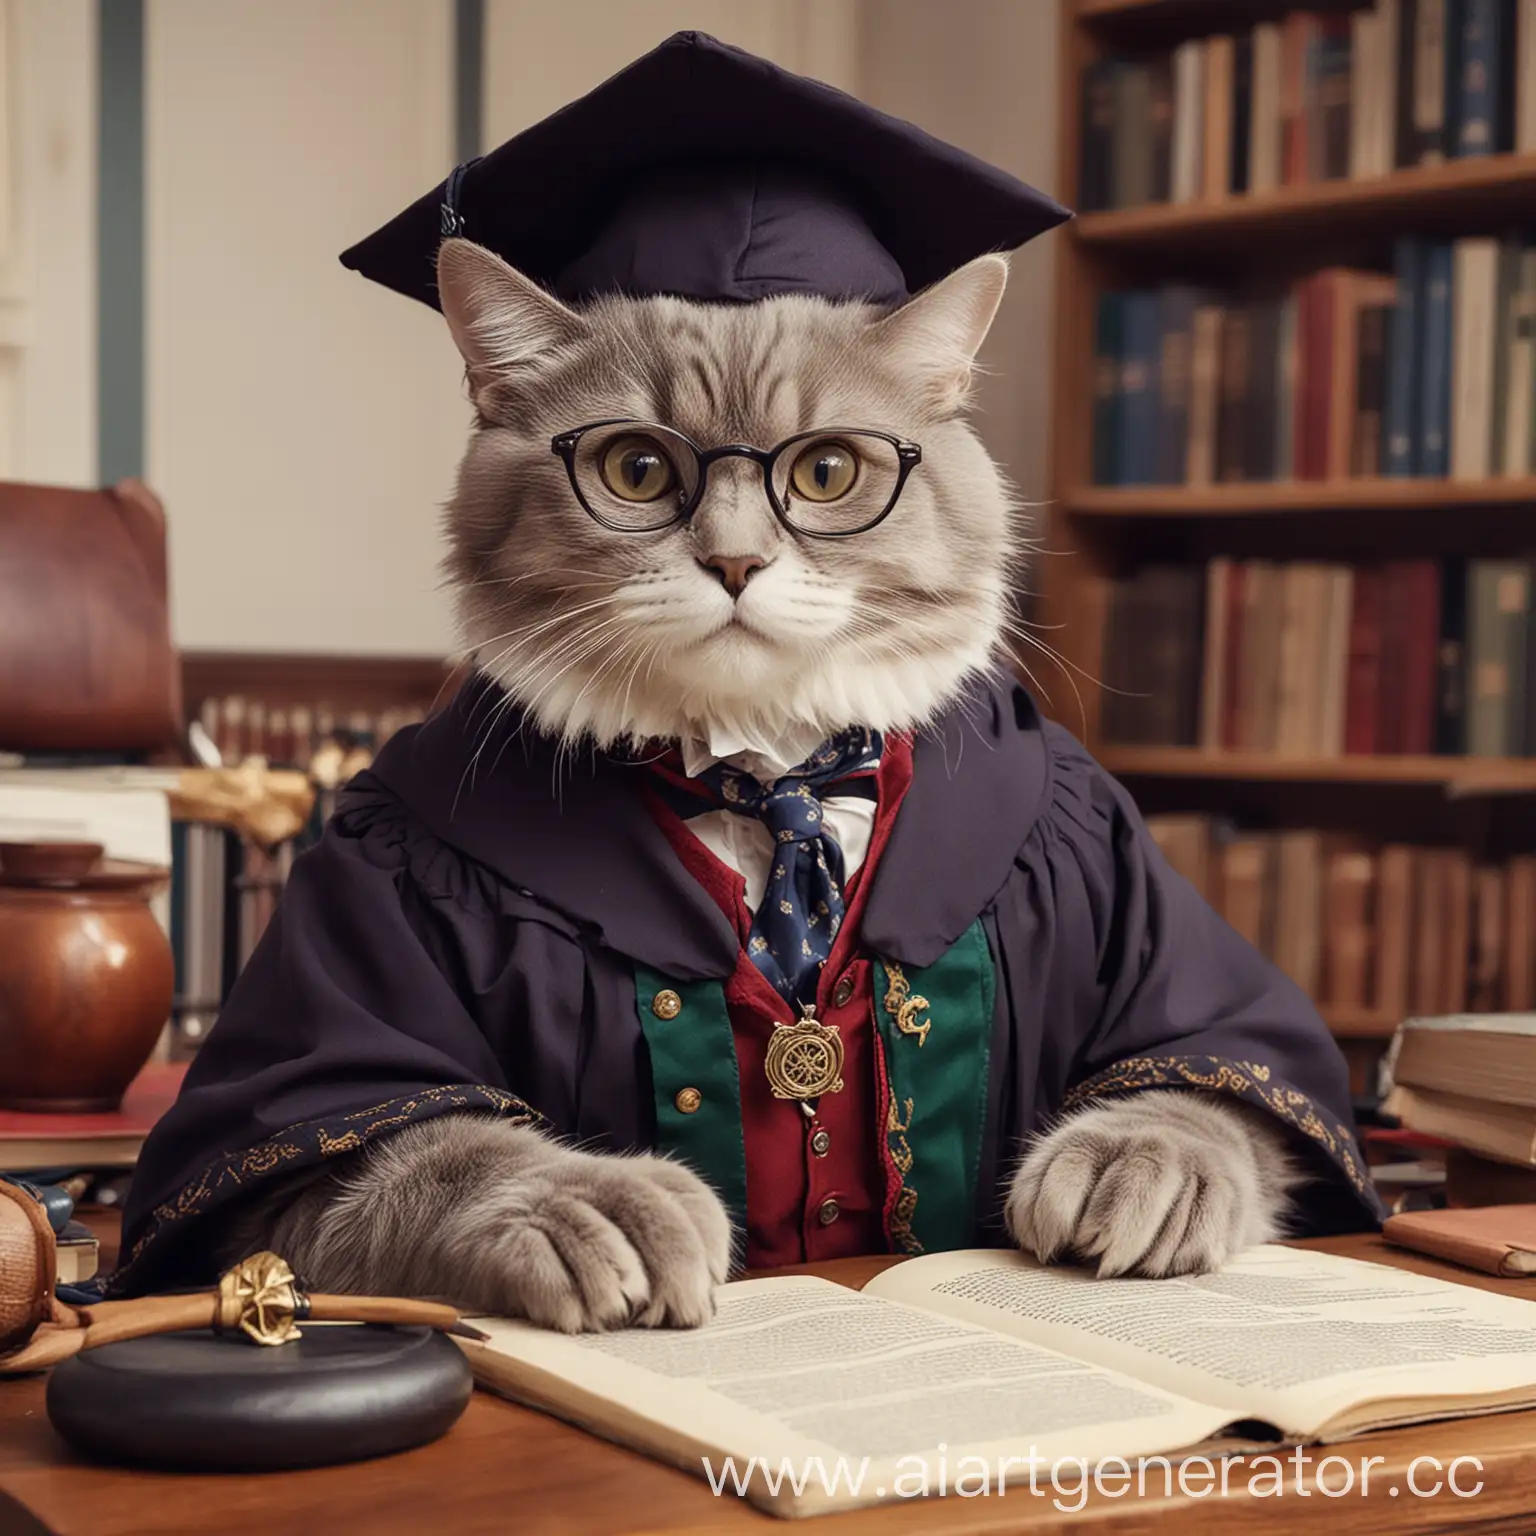 Eccentric-Scholar-Cat-Professor-Merlin-Expert-Academic-Support-and-Enigmatic-Feline-Wisdom